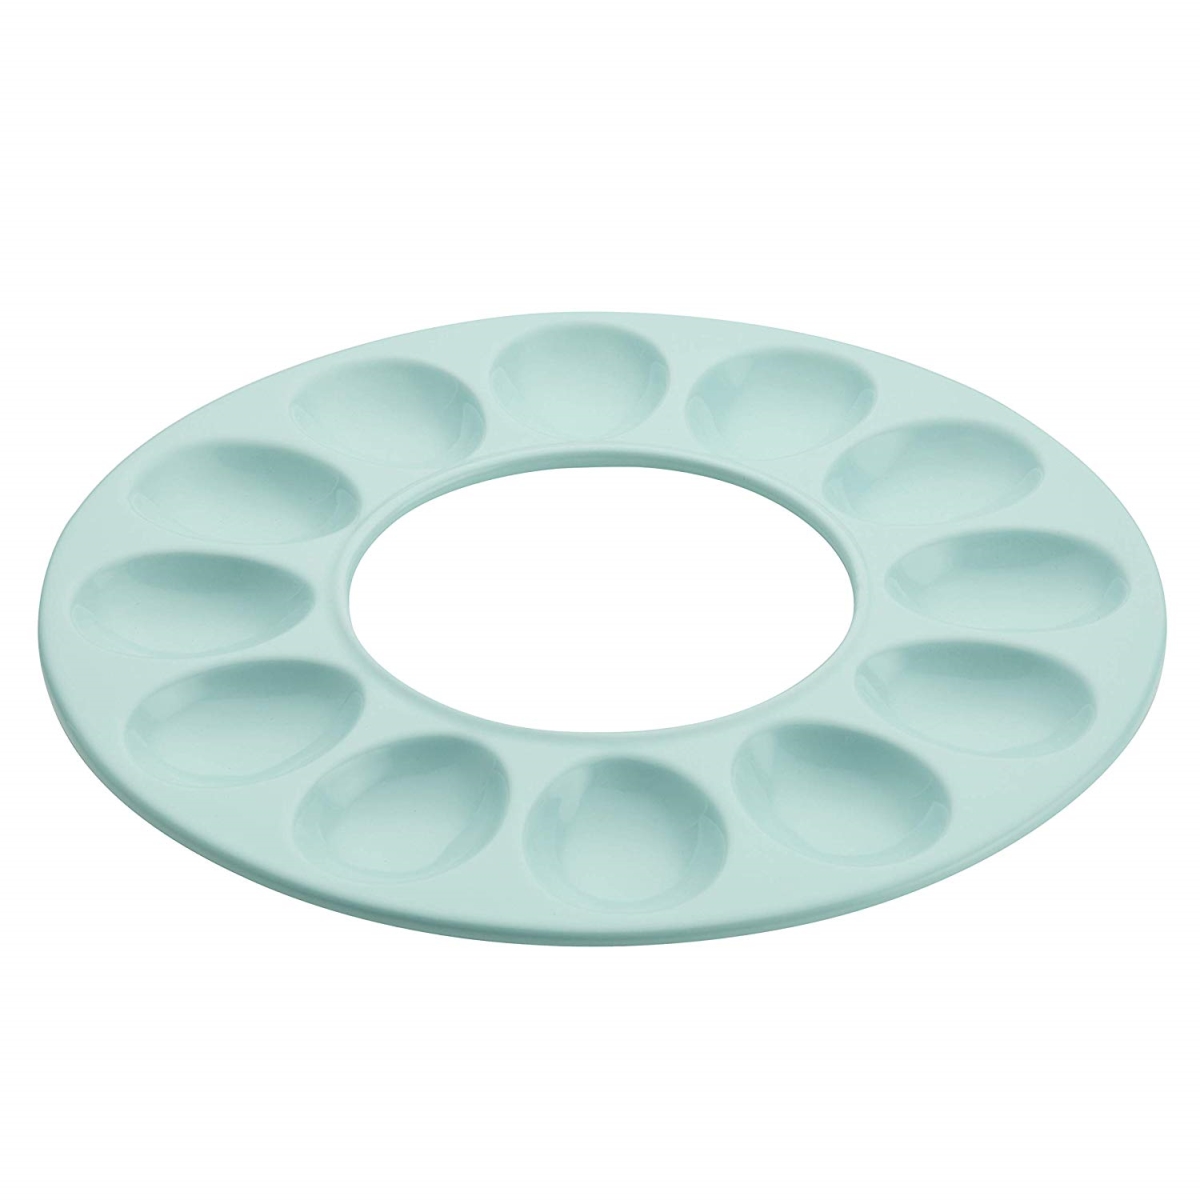 47866 Ceramics 12-cup Round Egg Tray, Light Blue